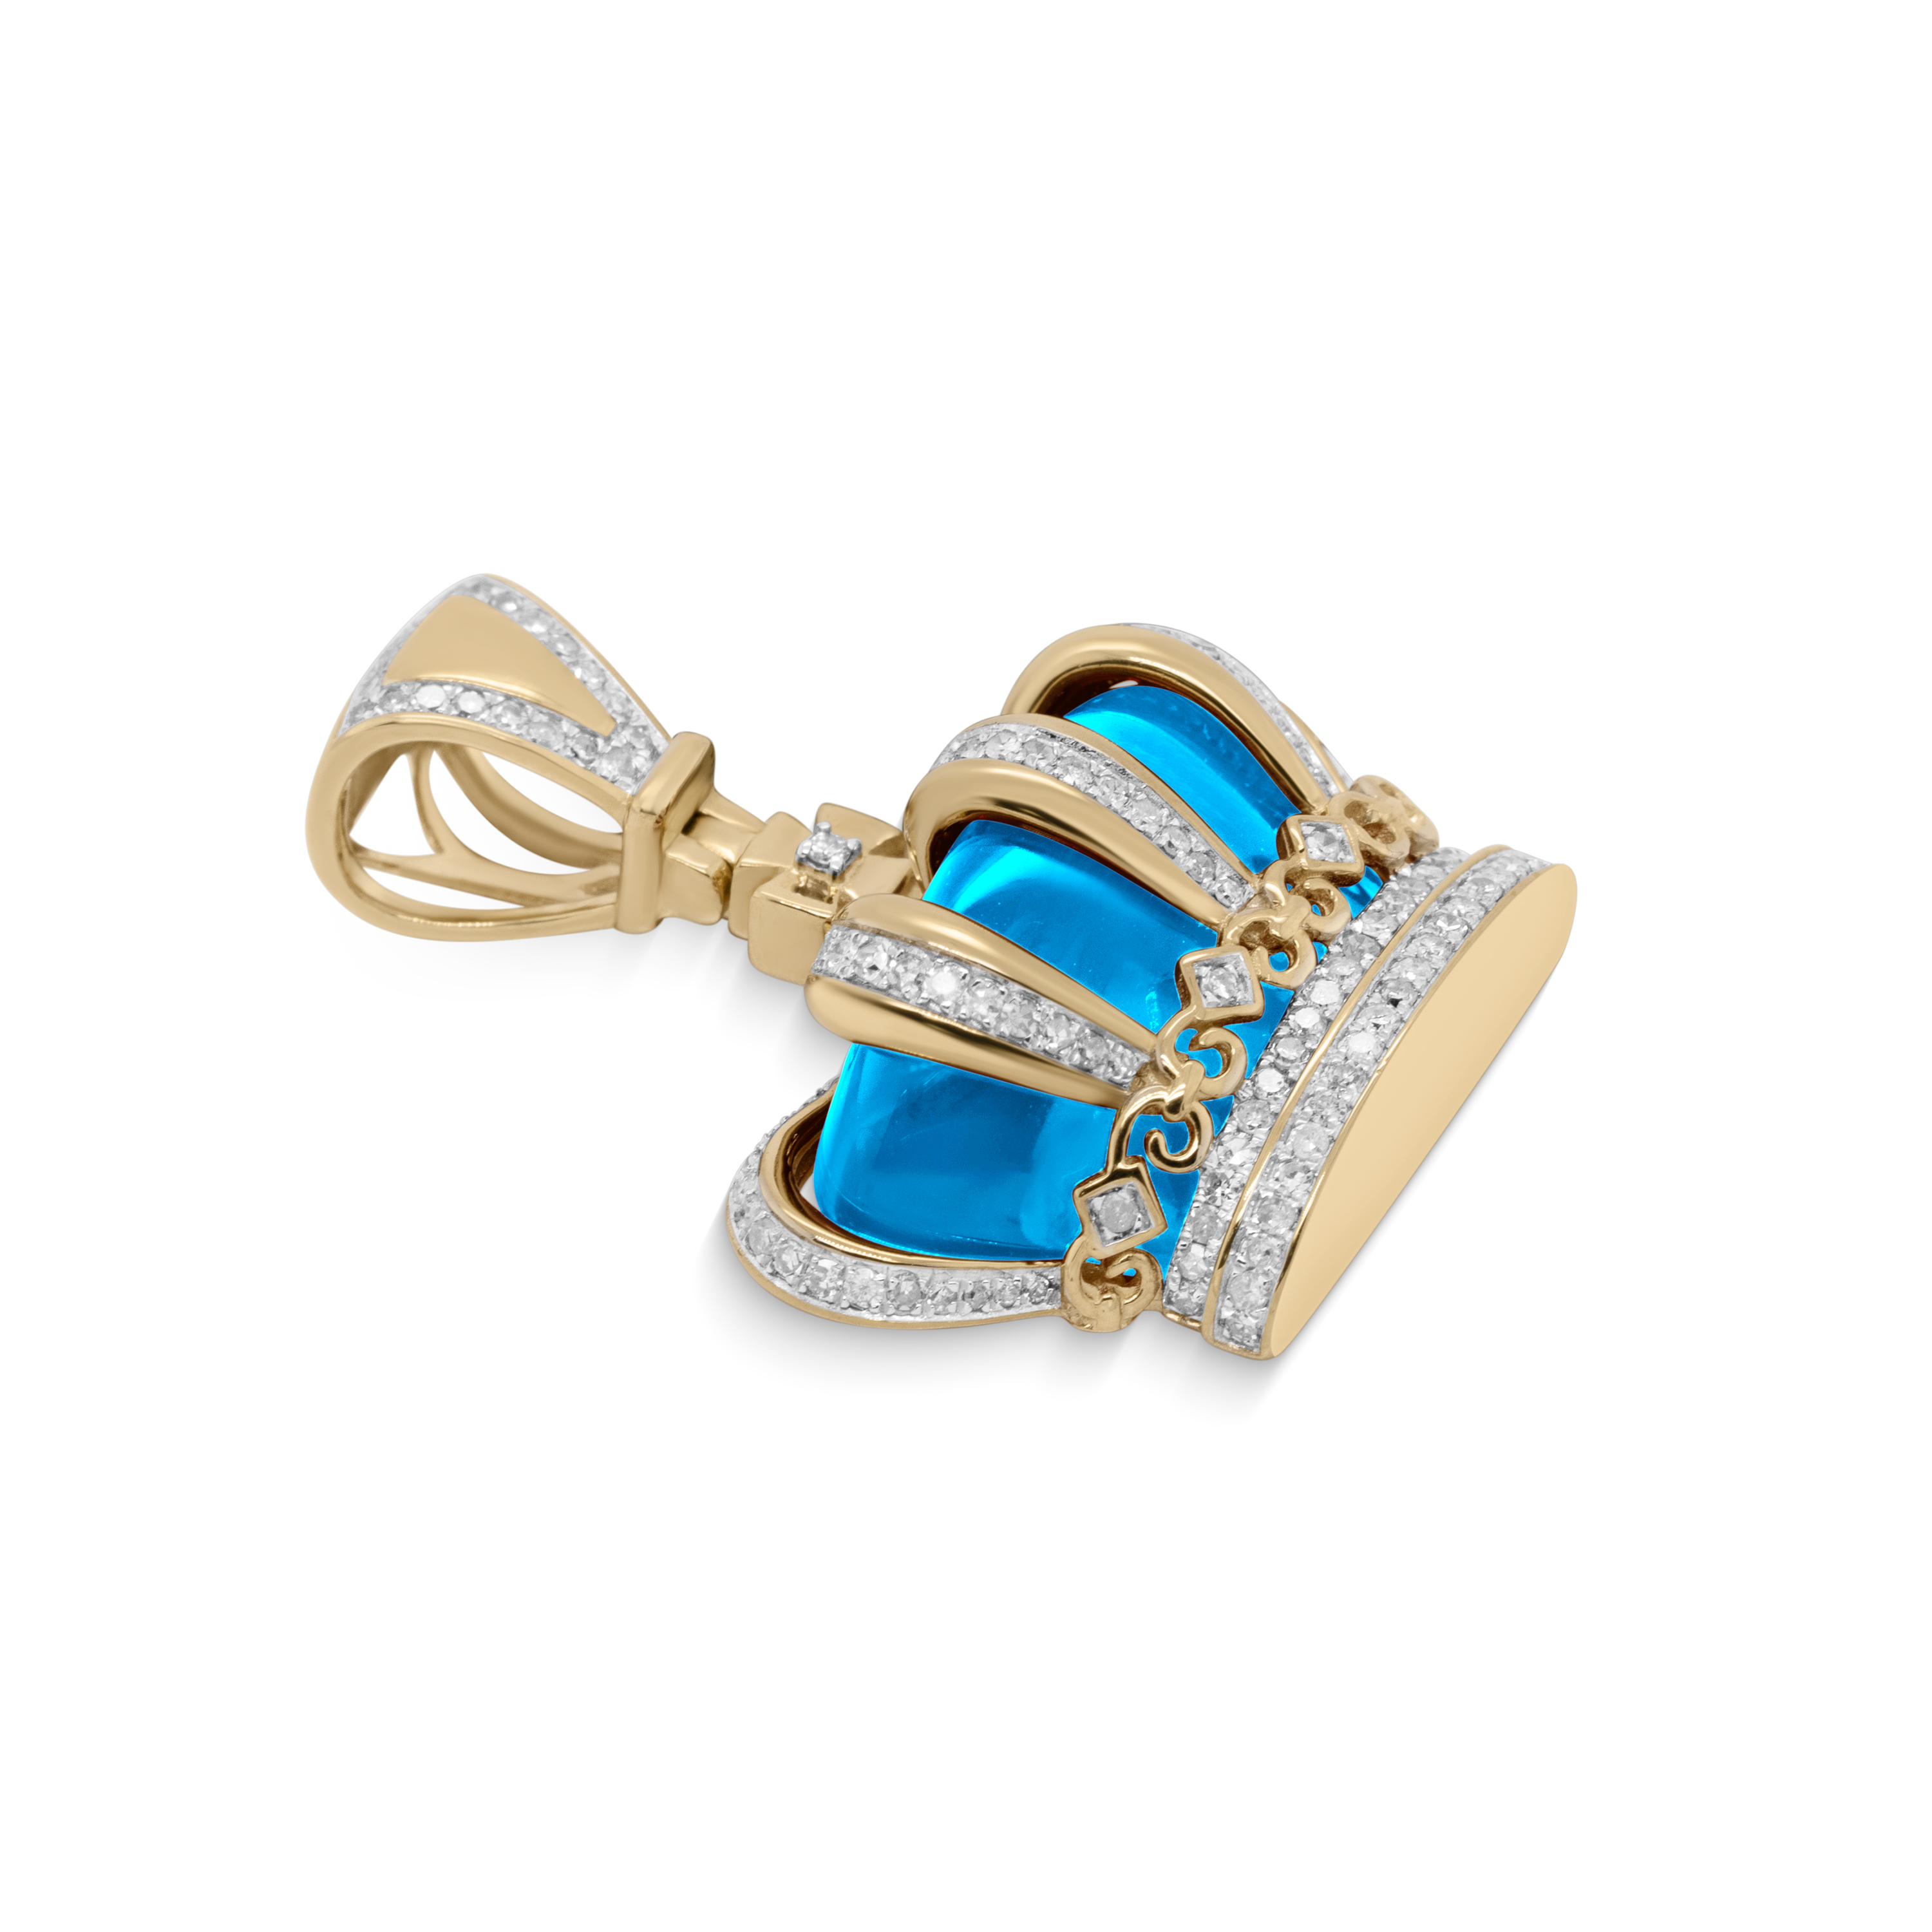 Diamond Crown with Blue Stone Pendant 0.65 ct. 10K Yellow Gold